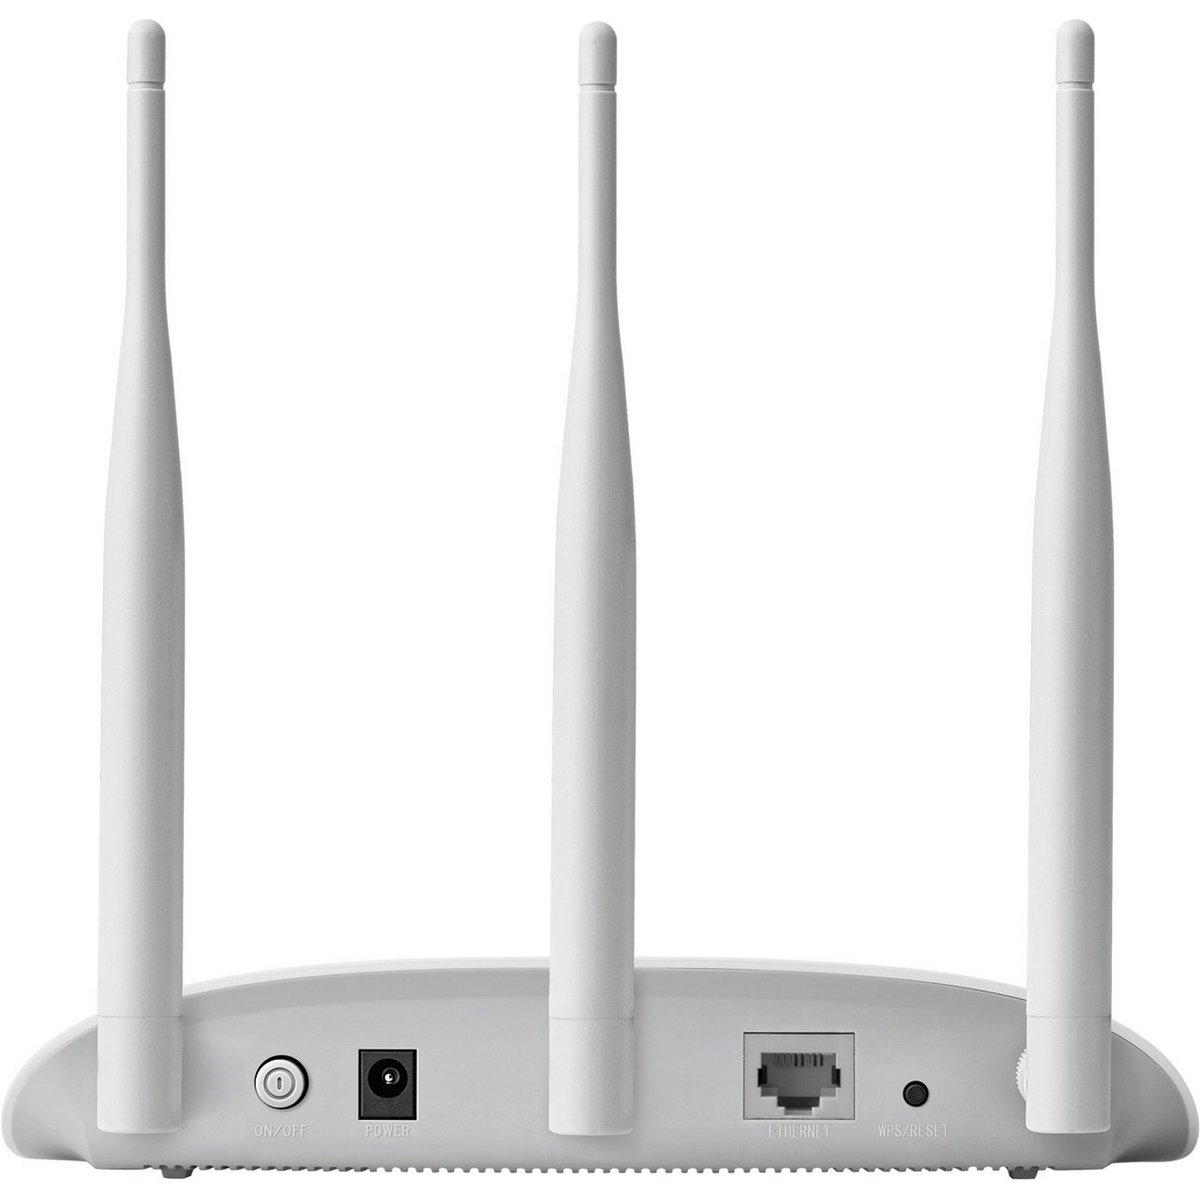 TP-Link Wireless N Access Point TL-WA901ND